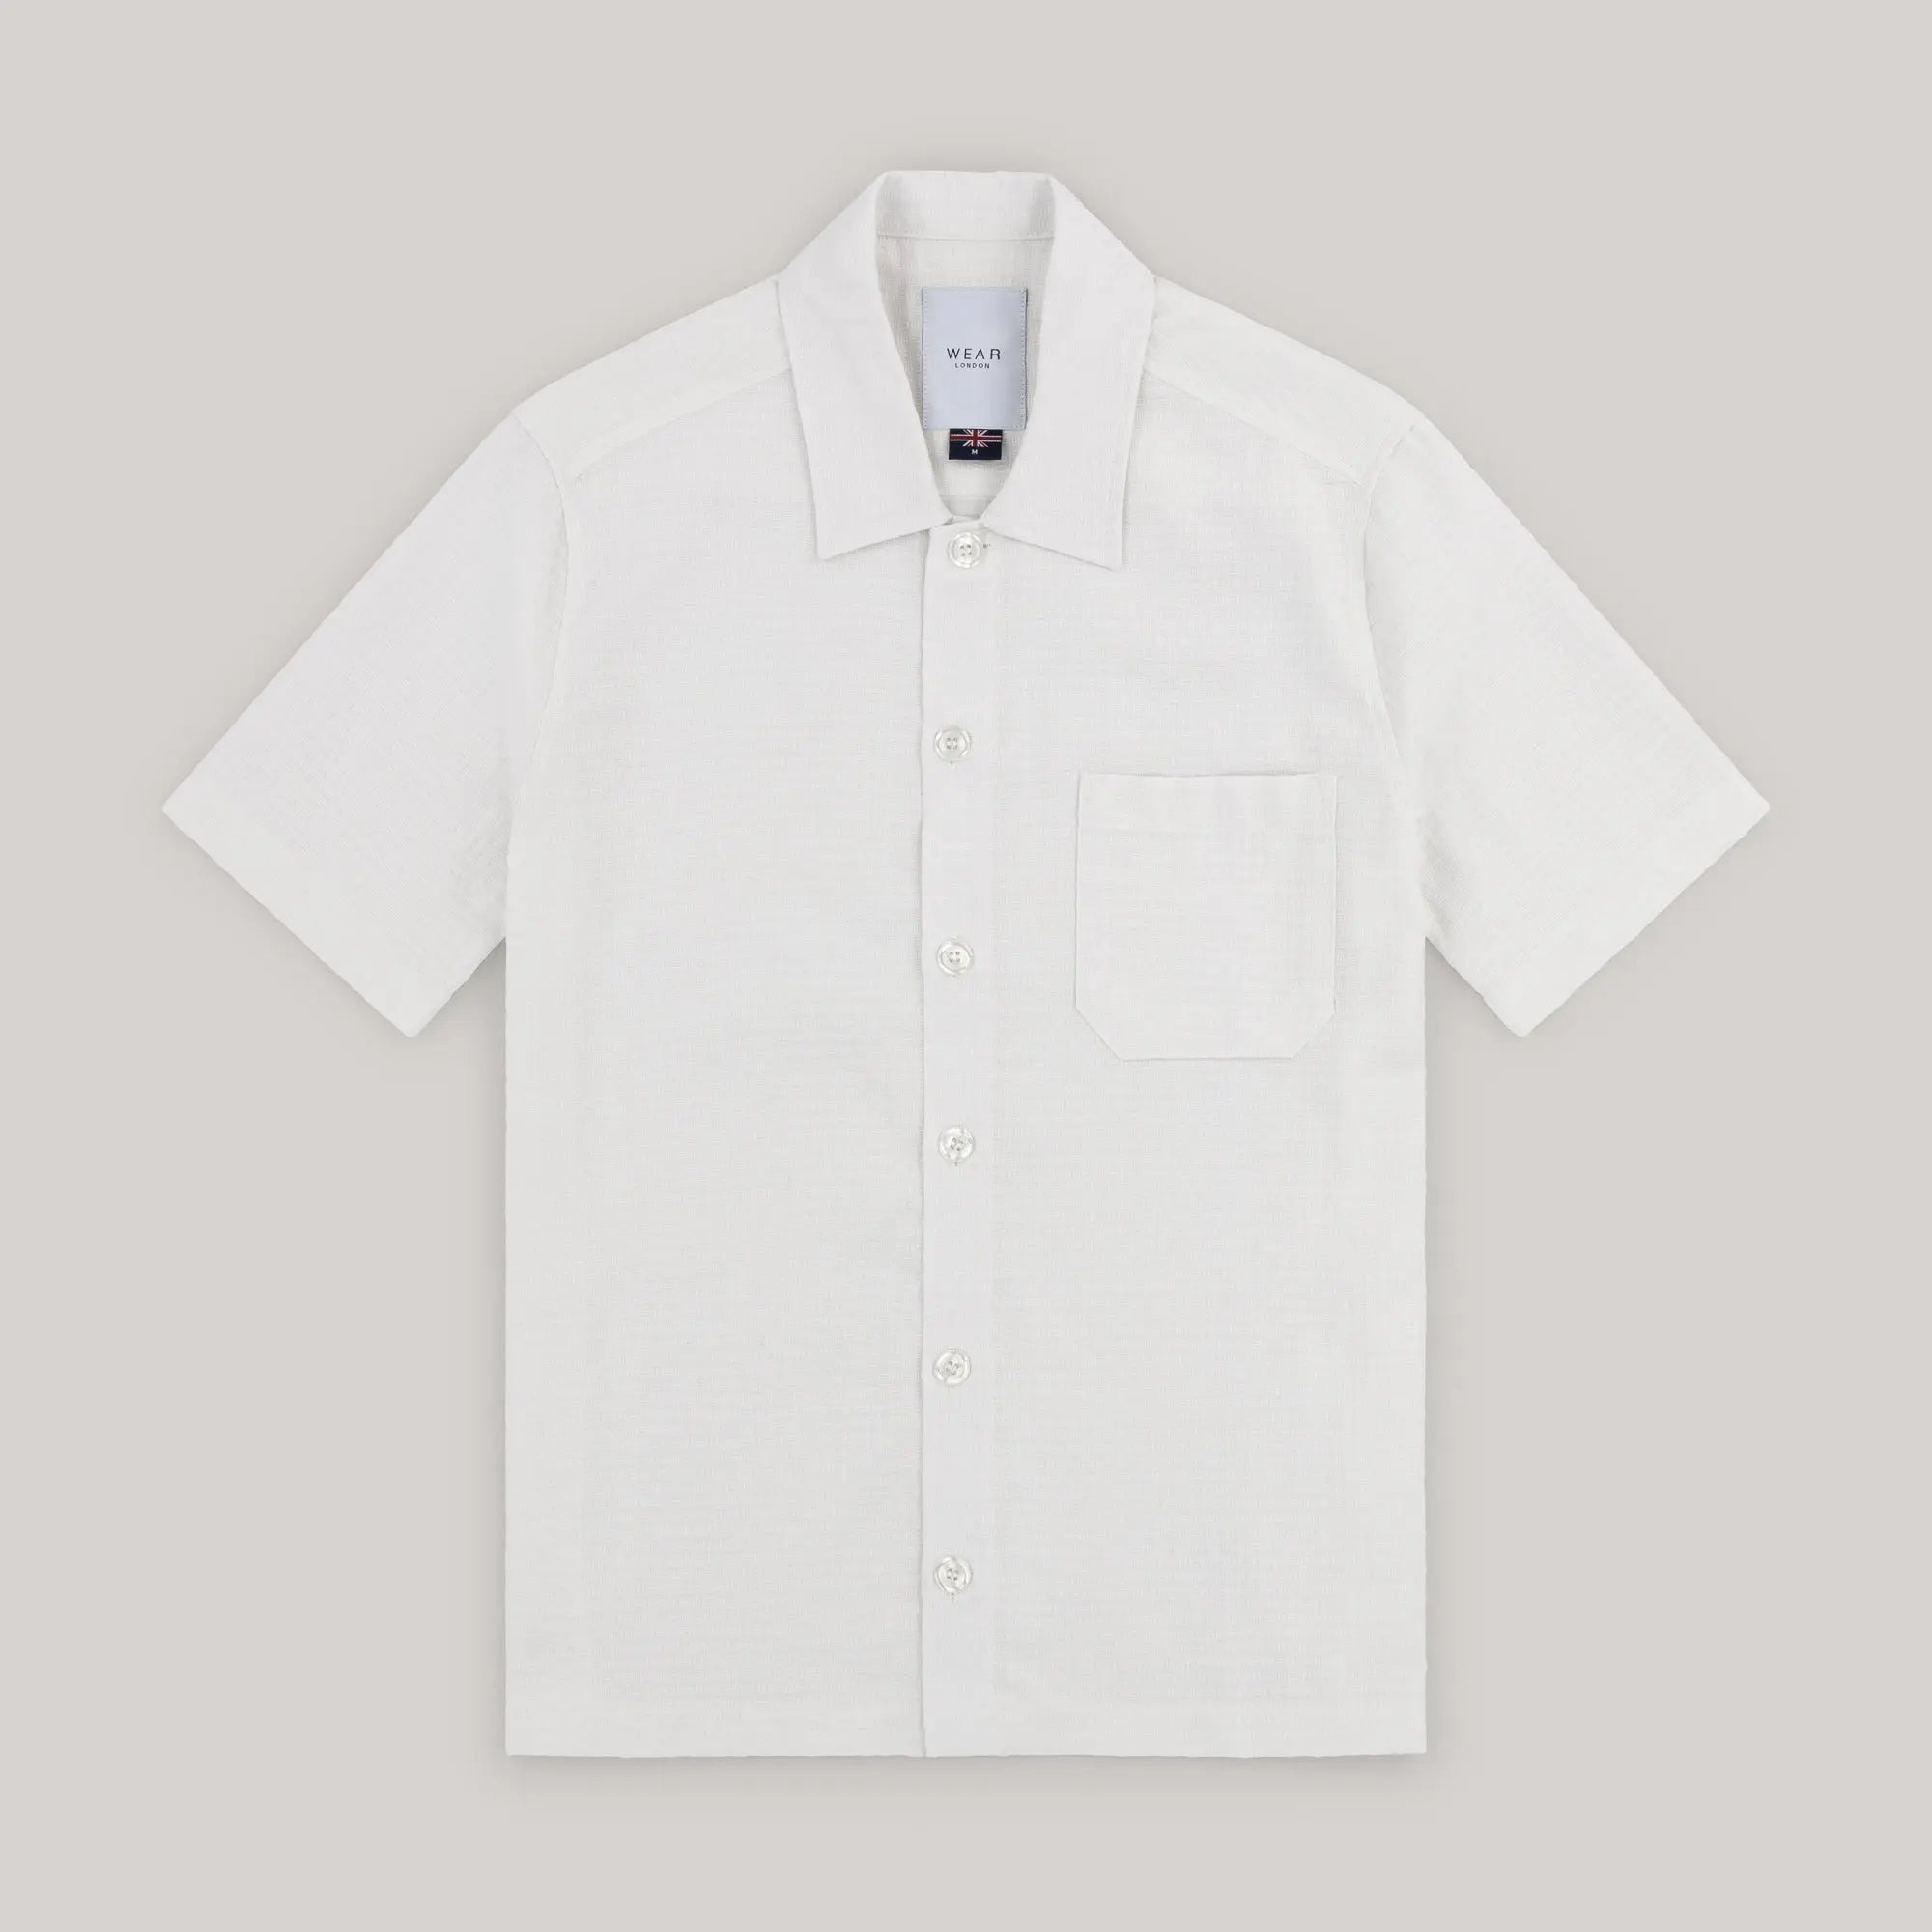 Deal Short Sleeve Shirt - White Wilkes - Wear London